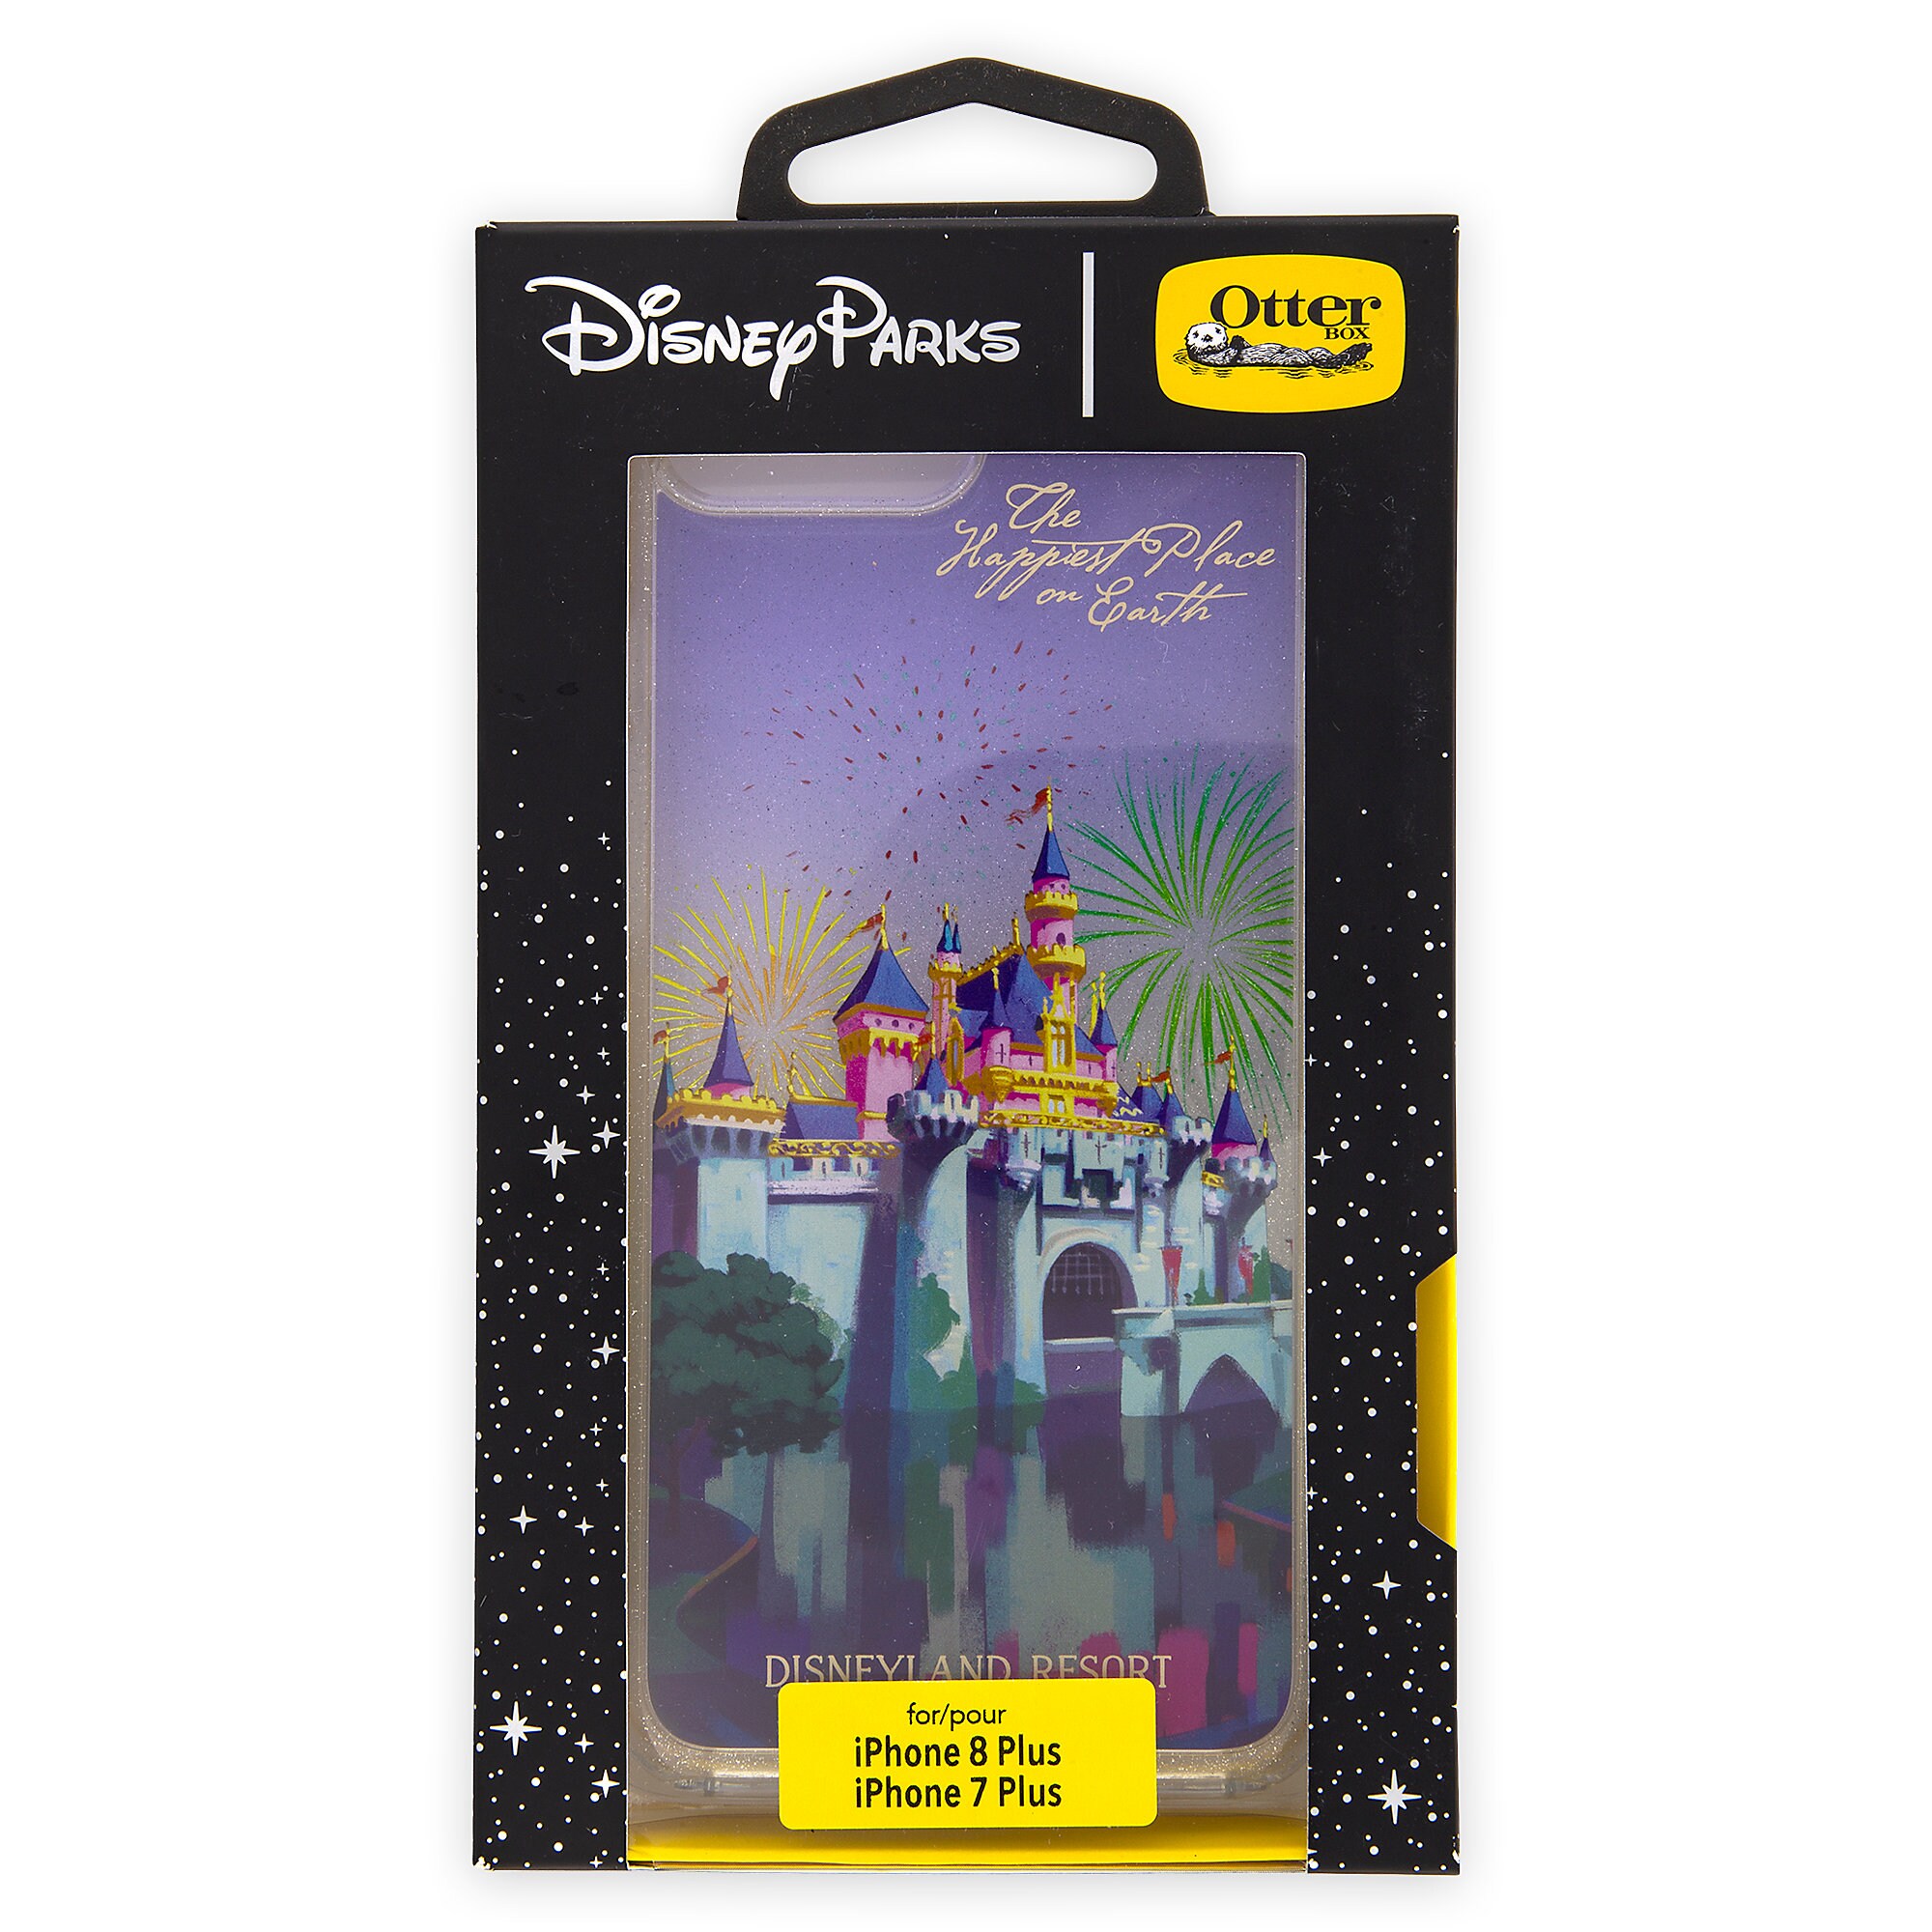 Sleeping Beauty Castle iPhone 8 Plus/7 Plus Case by OtterBox - Disneyland